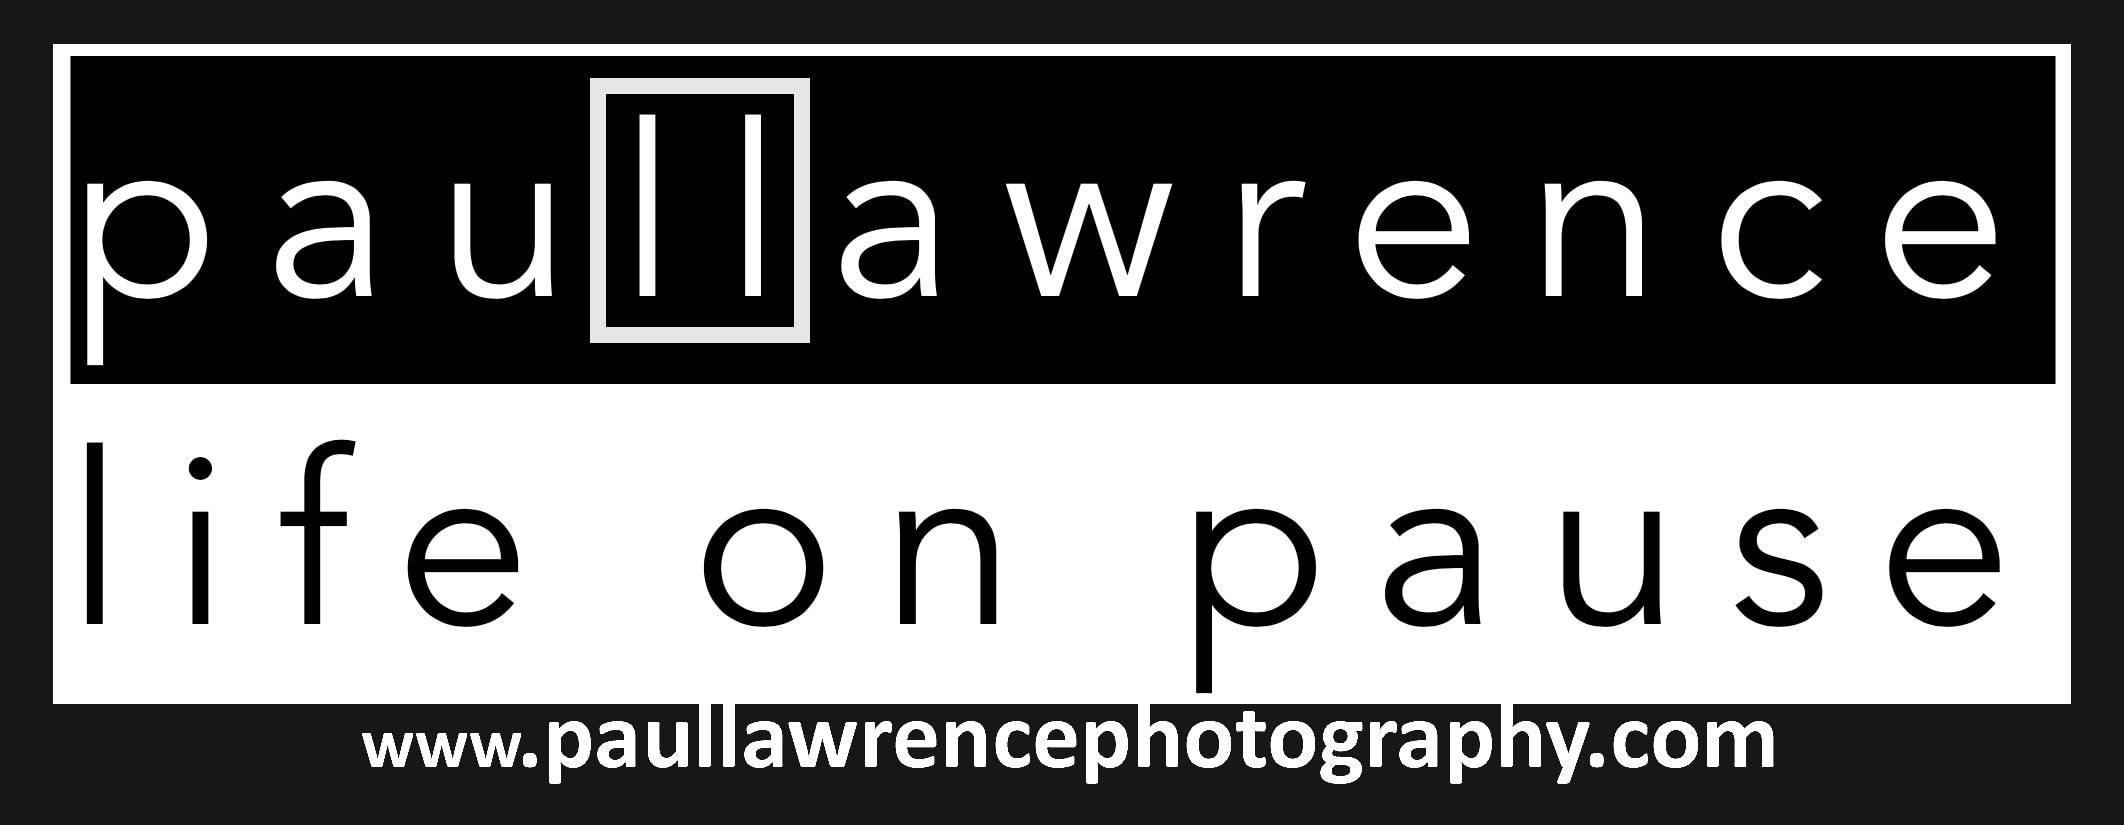 Paul J. Lawrence Photography